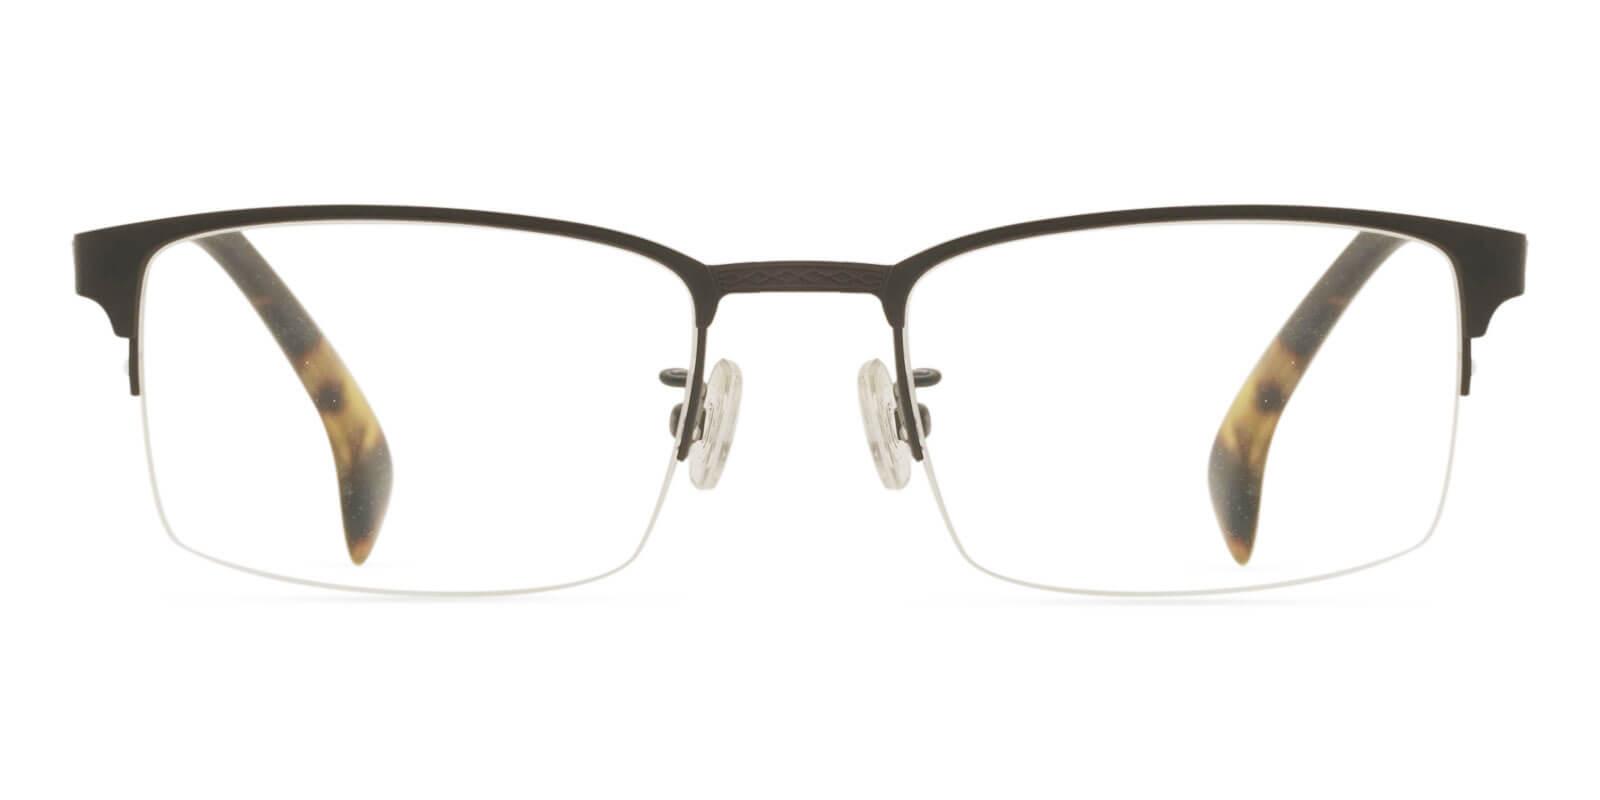 Gabriel Tortoise Metal Eyeglasses , NosePads Frames from ABBE Glasses